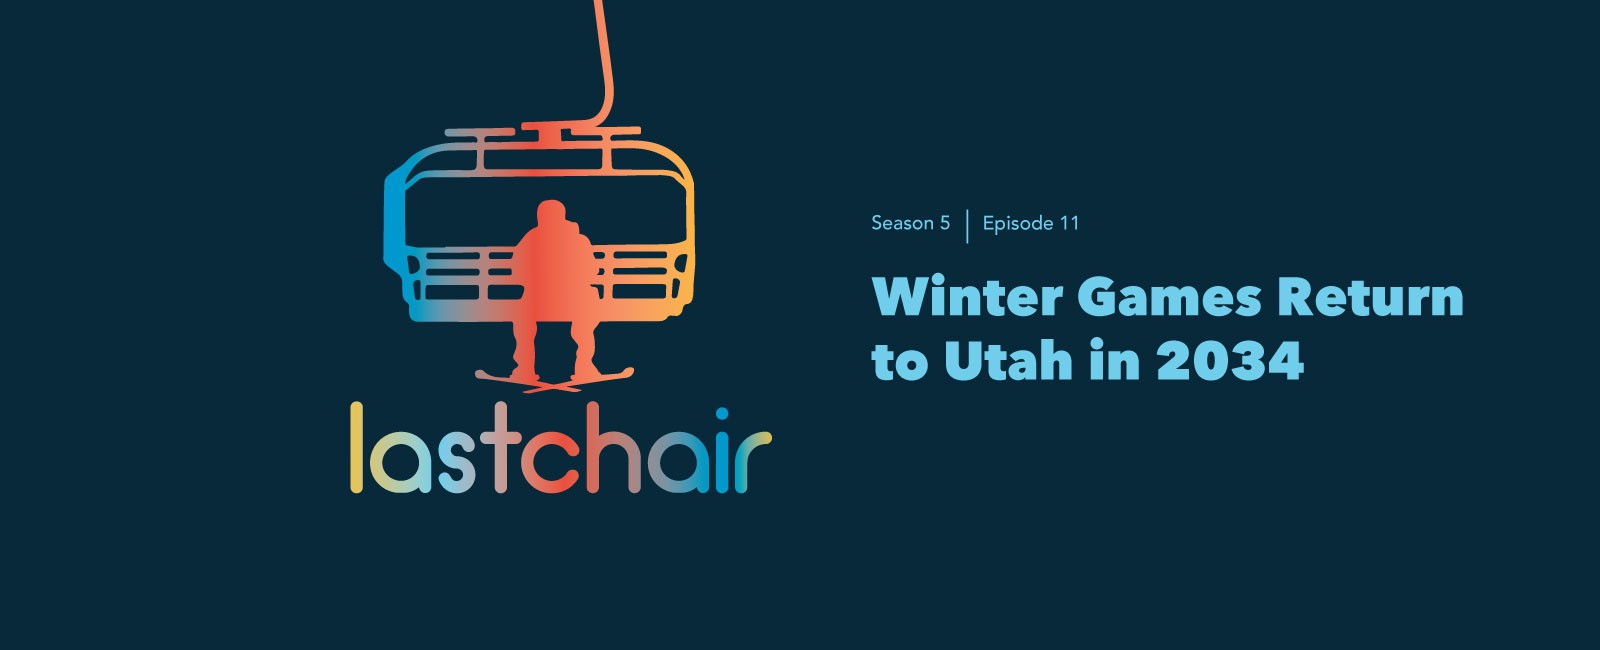 Winter Games Returning to Utah in 2034